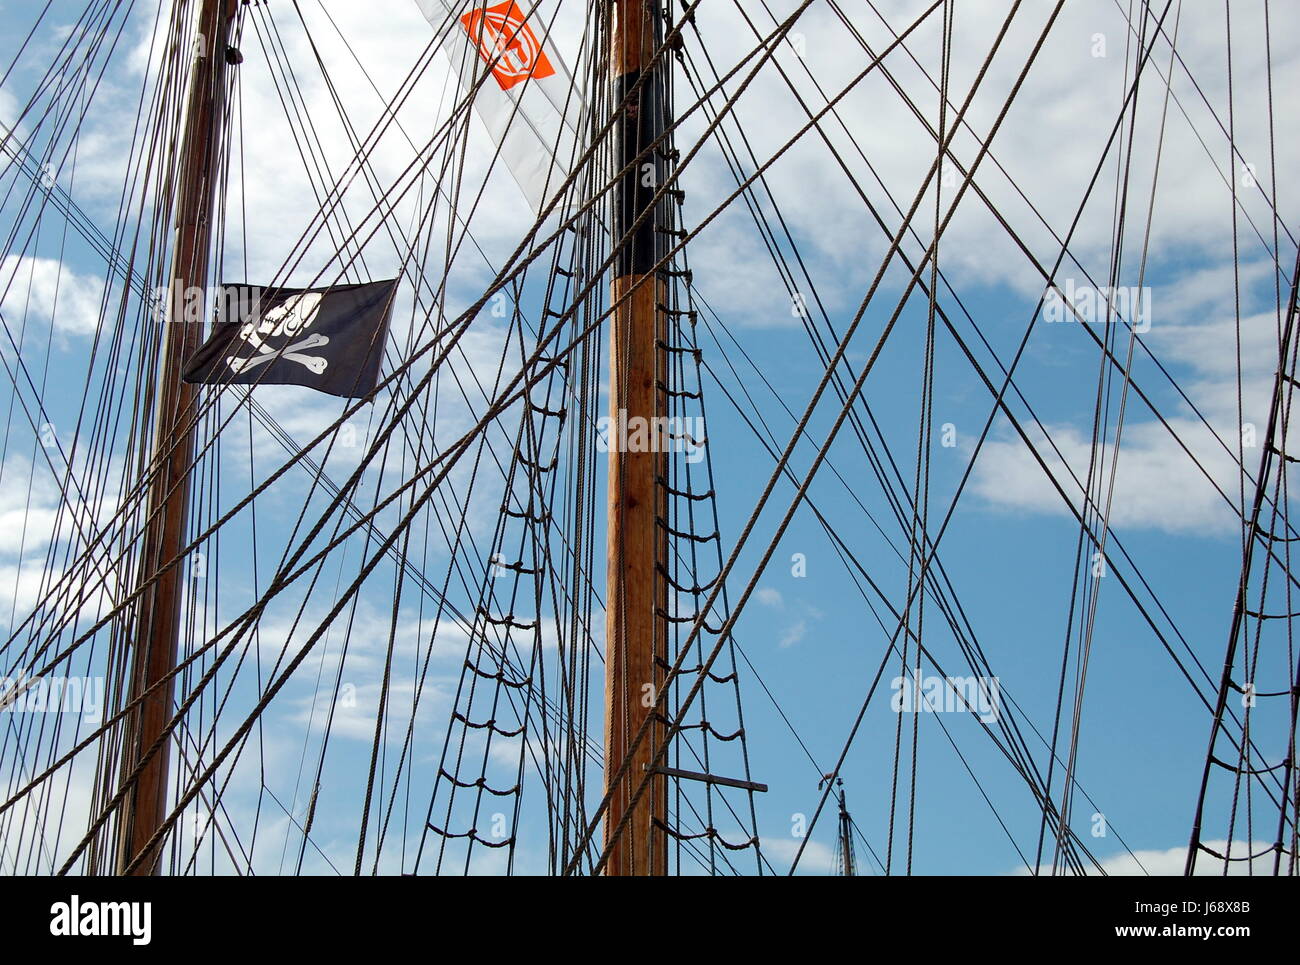 Segel-net Tau Fahne Piraten Seil Treppe Sommer sommerlich vernetzt Flagge  Mast Kiel Stockfotografie - Alamy